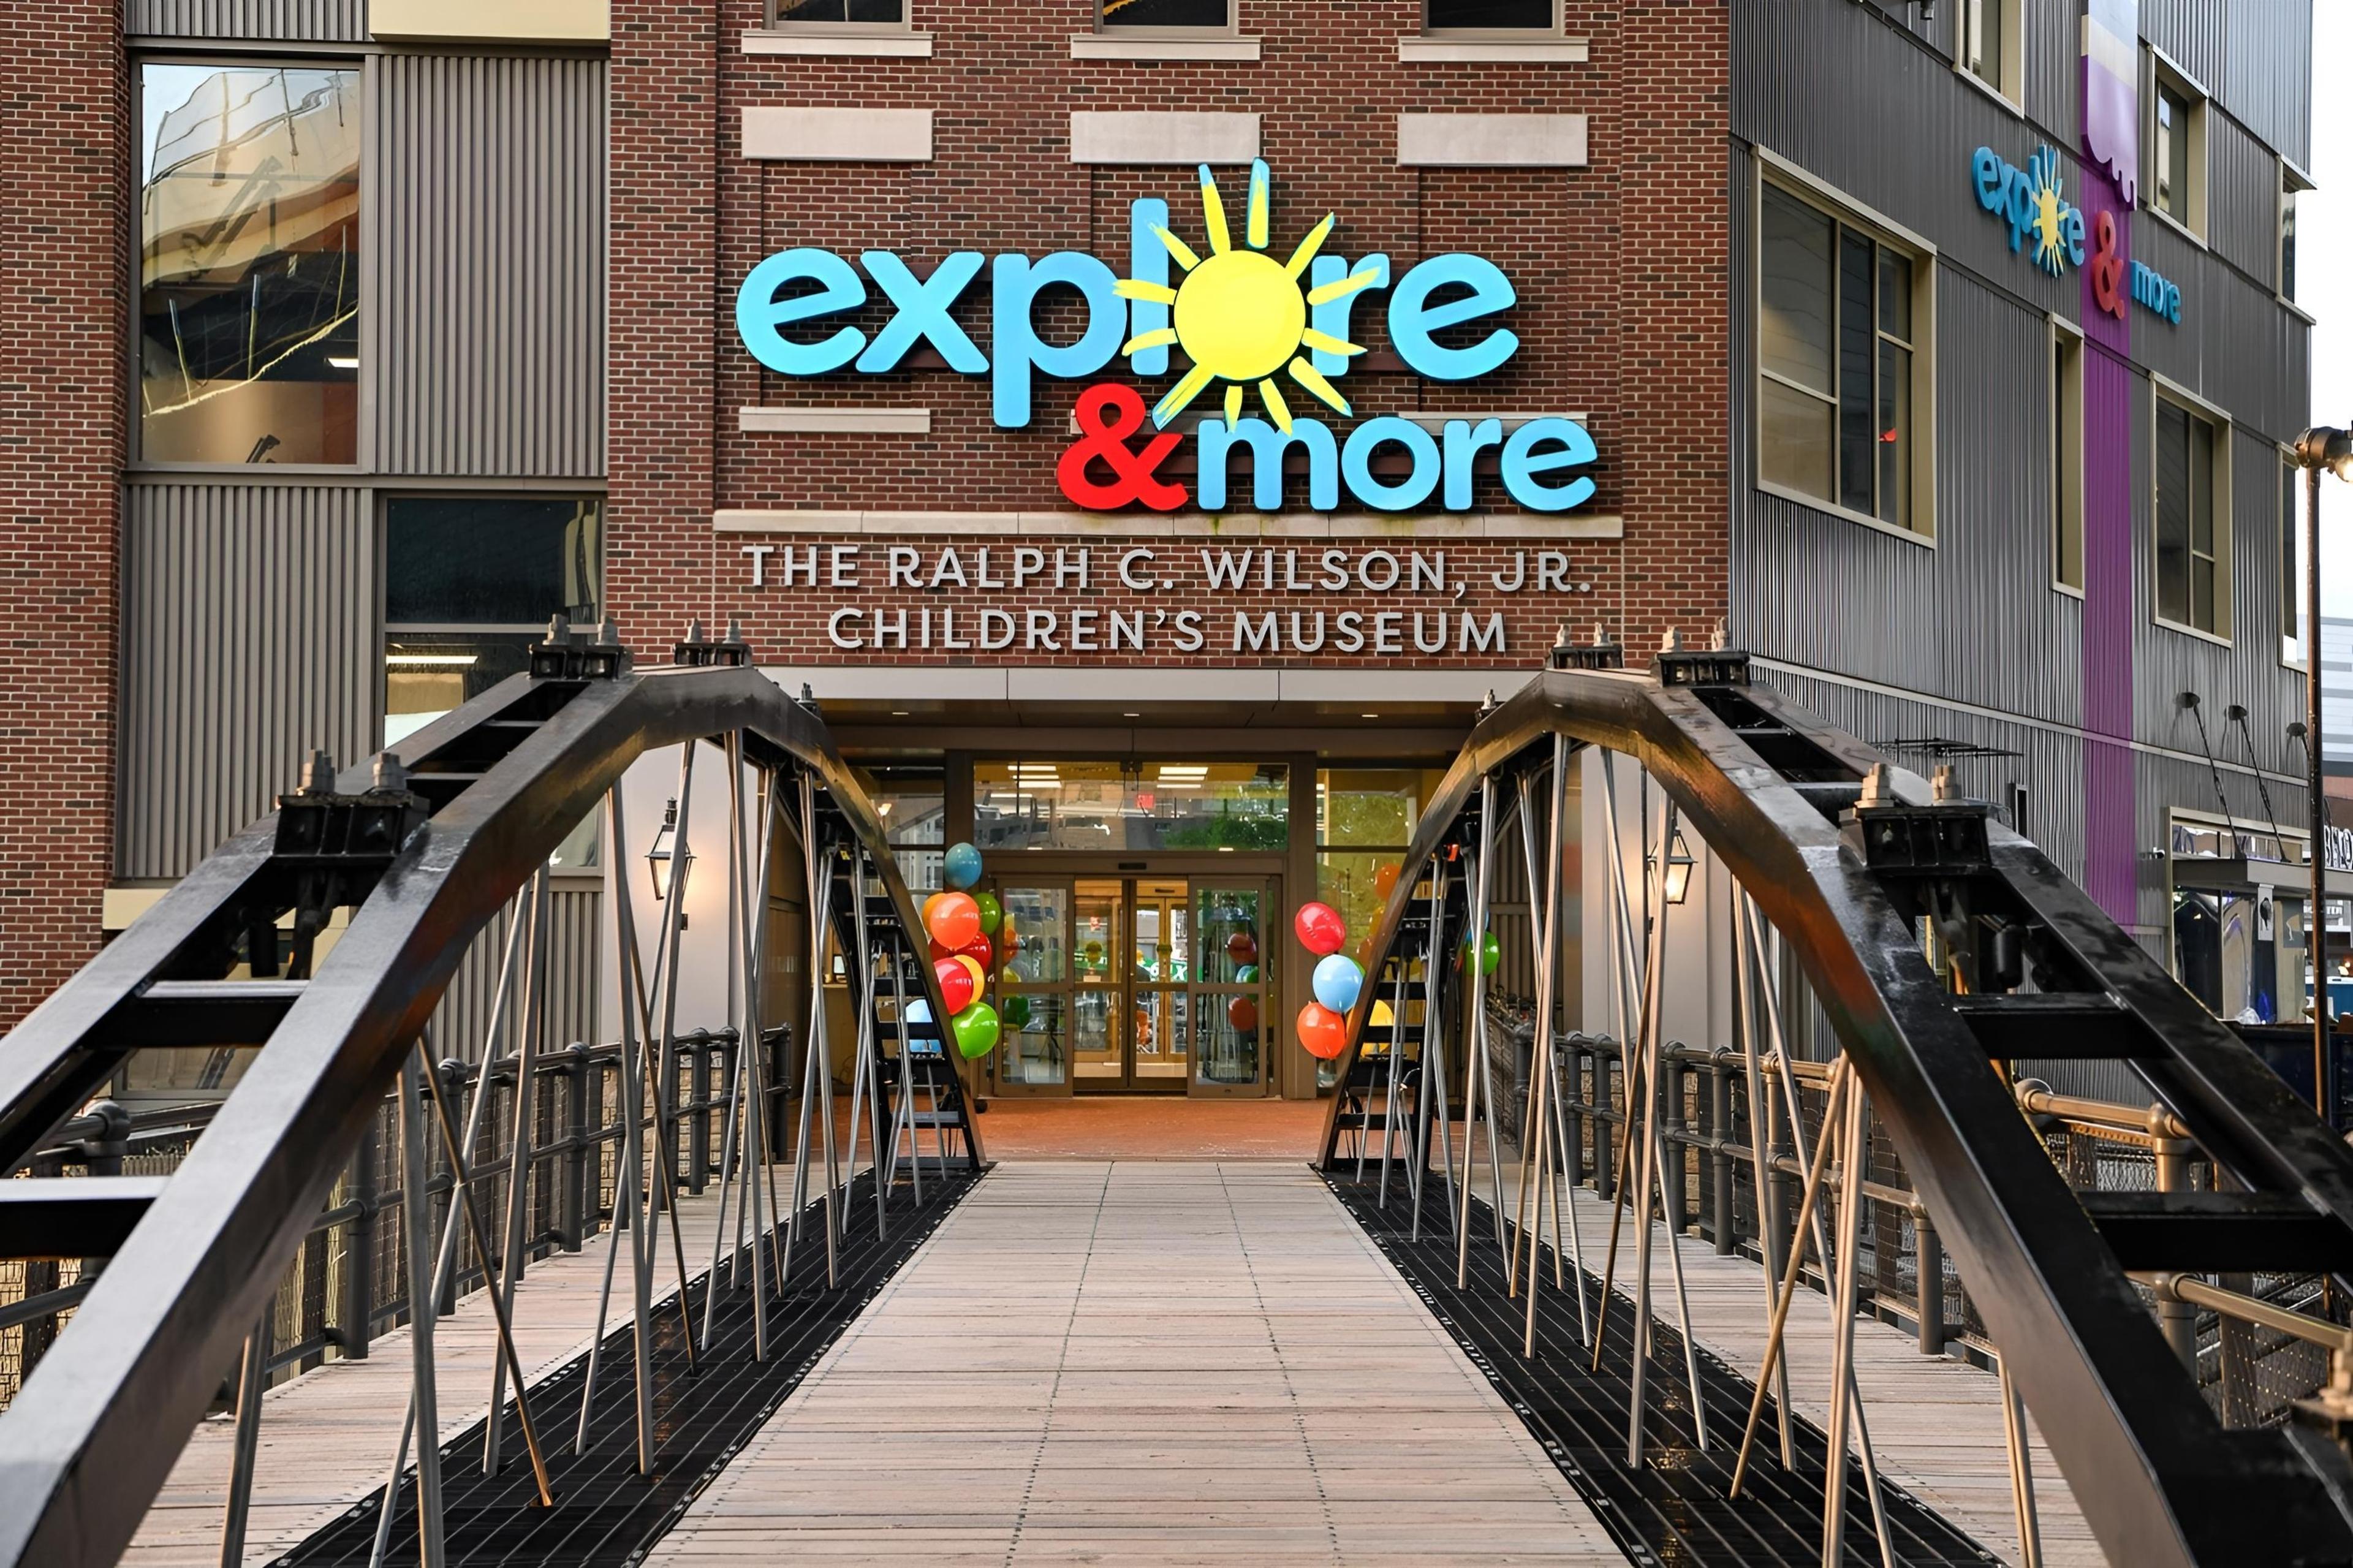 Explore & More - The Ralph C. Wilson, Jr. Children's Museum